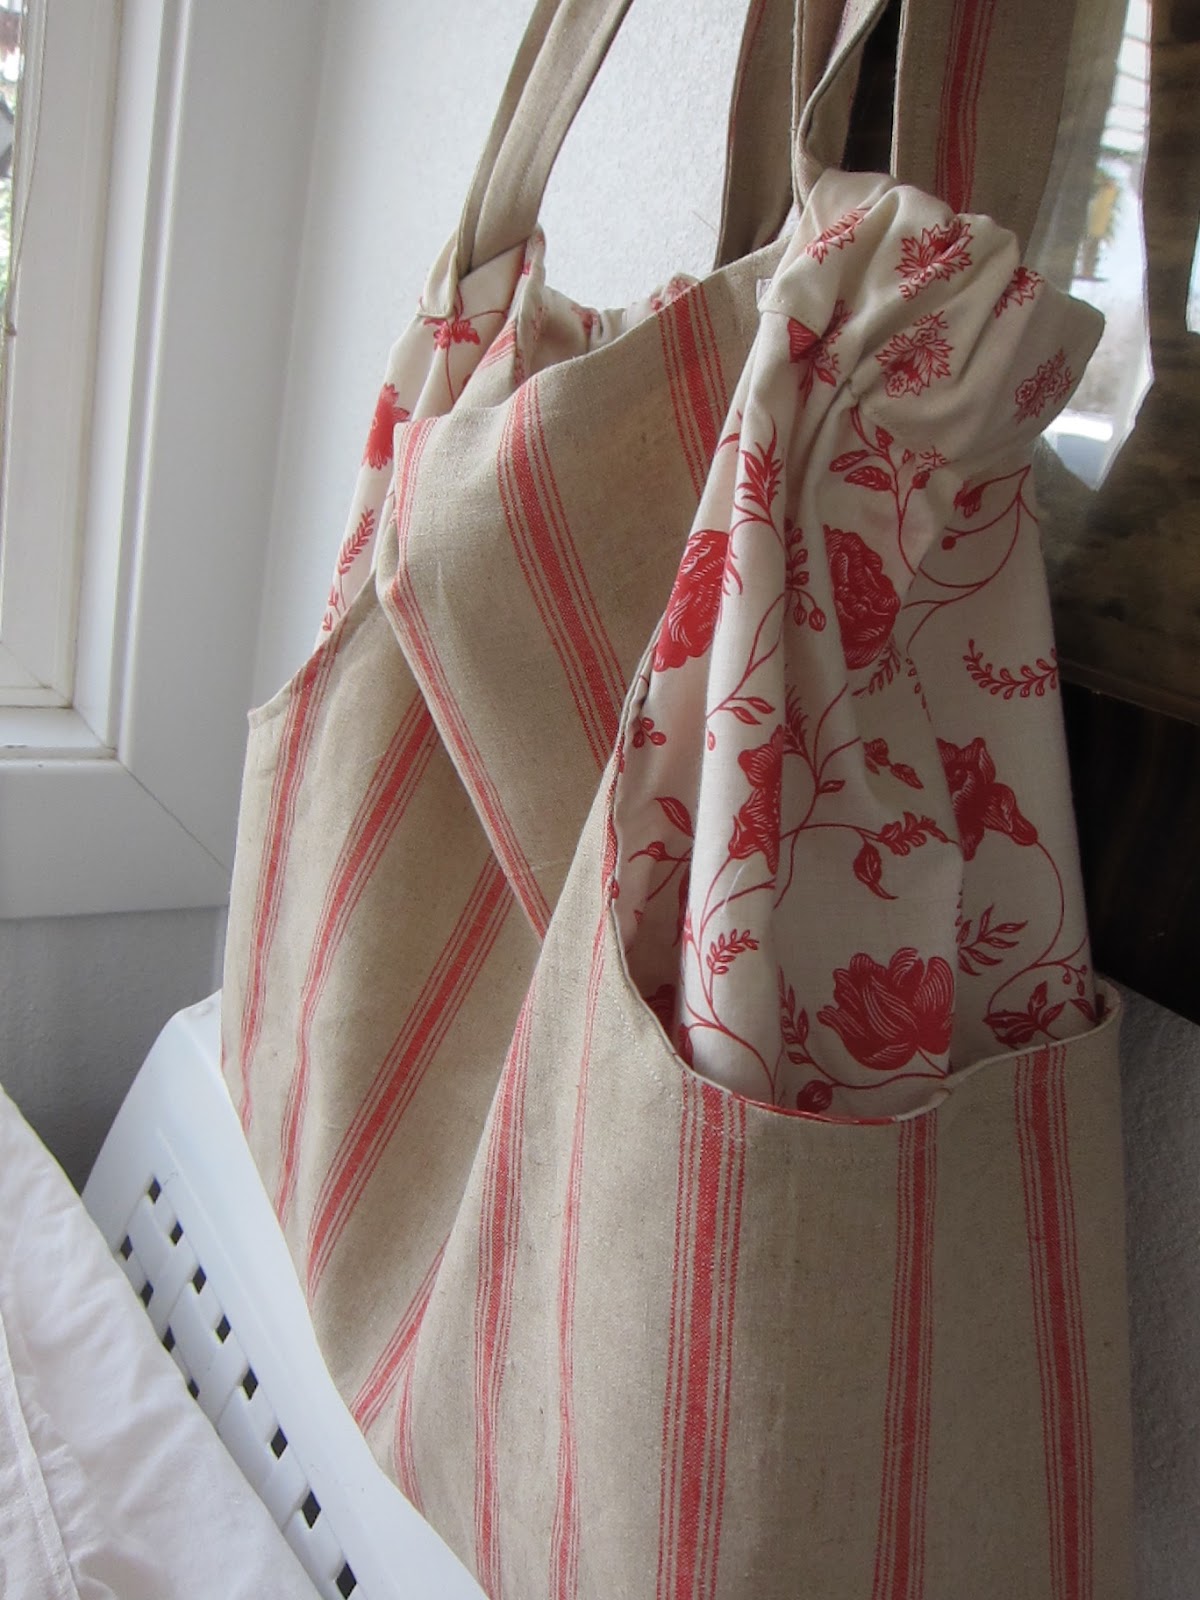 Dogwood designs: French General Fabric Purses